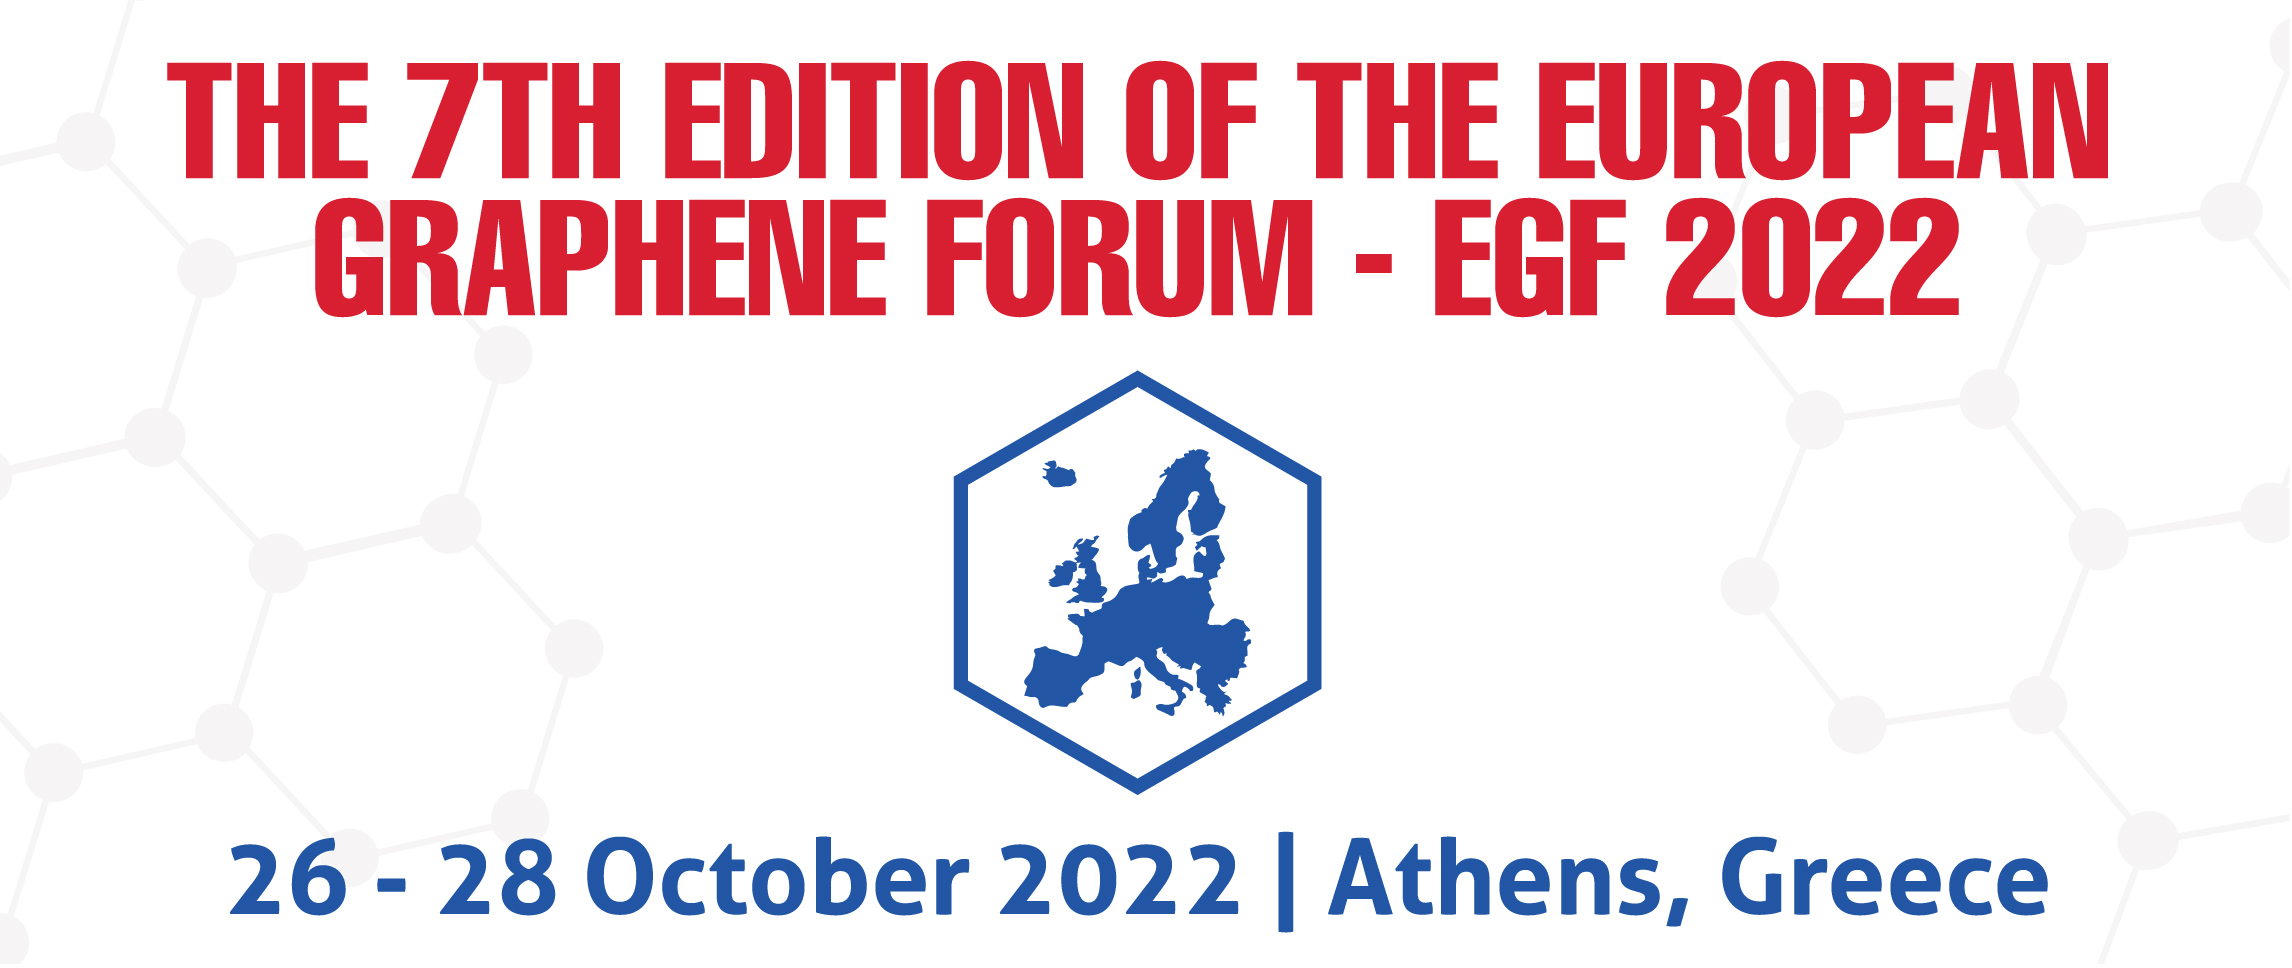 The 7th Ed. of the European Graphene Forum - EGF 2022